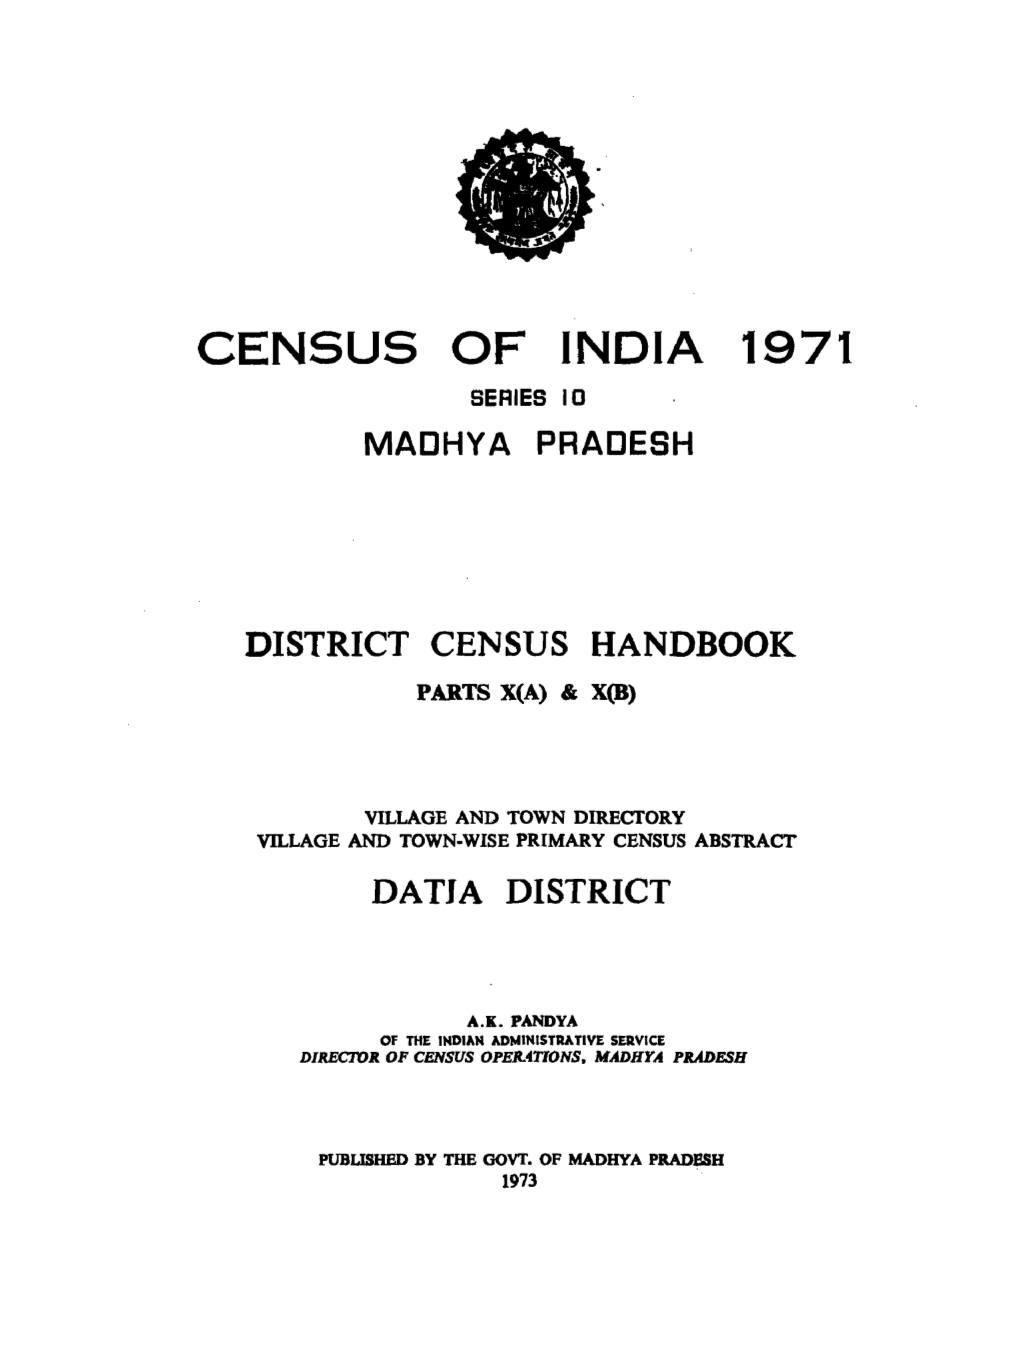 District Census Handbook, Datia, Parts X